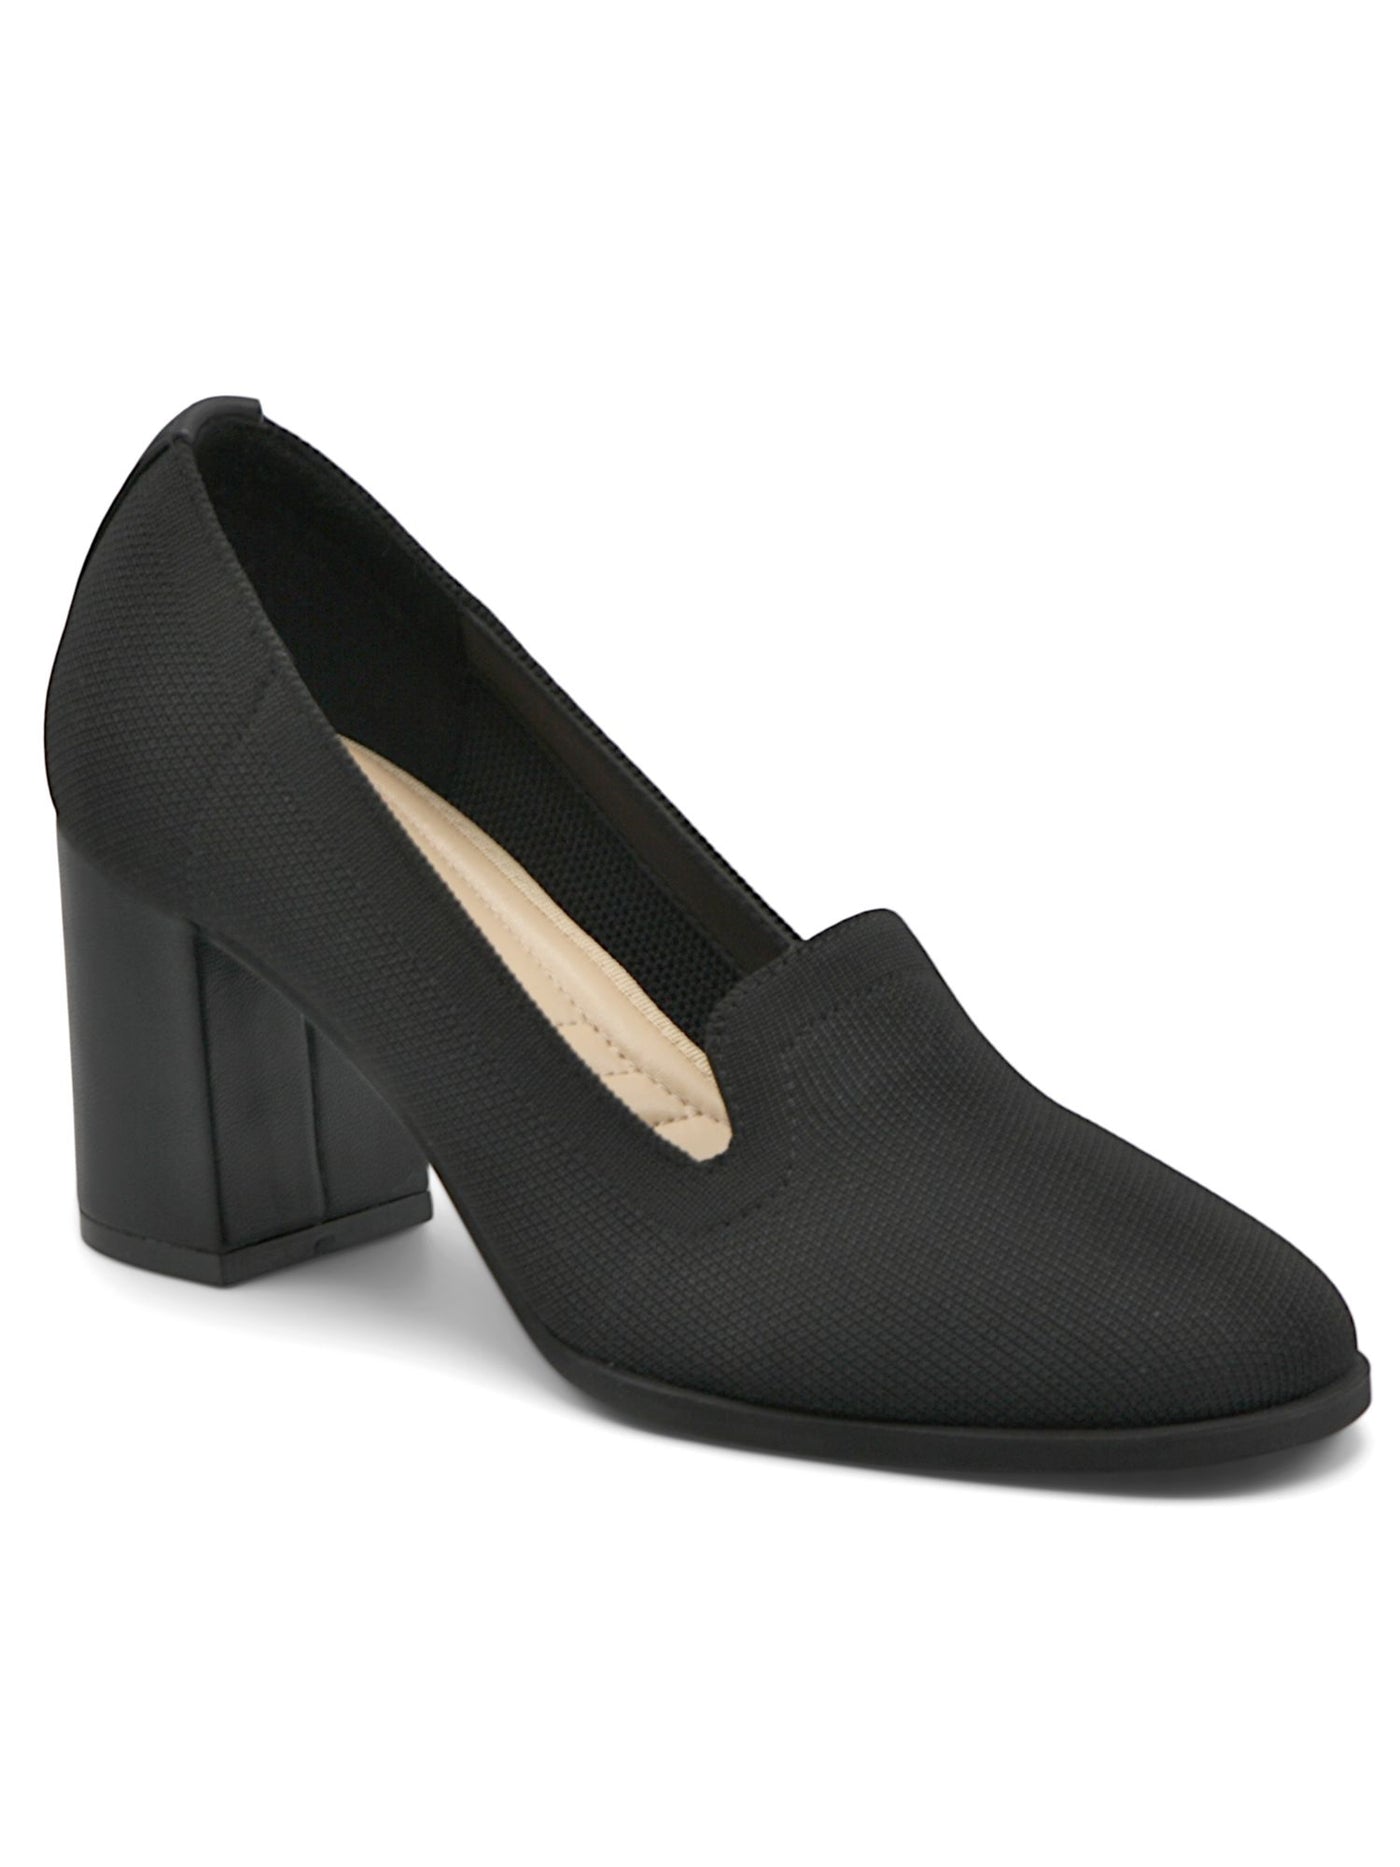 ADRIENNE VITTADINI Womens Black Knit Padded Brittiny Square Toe Block Heel Slip On Pumps Shoes 8.5 M